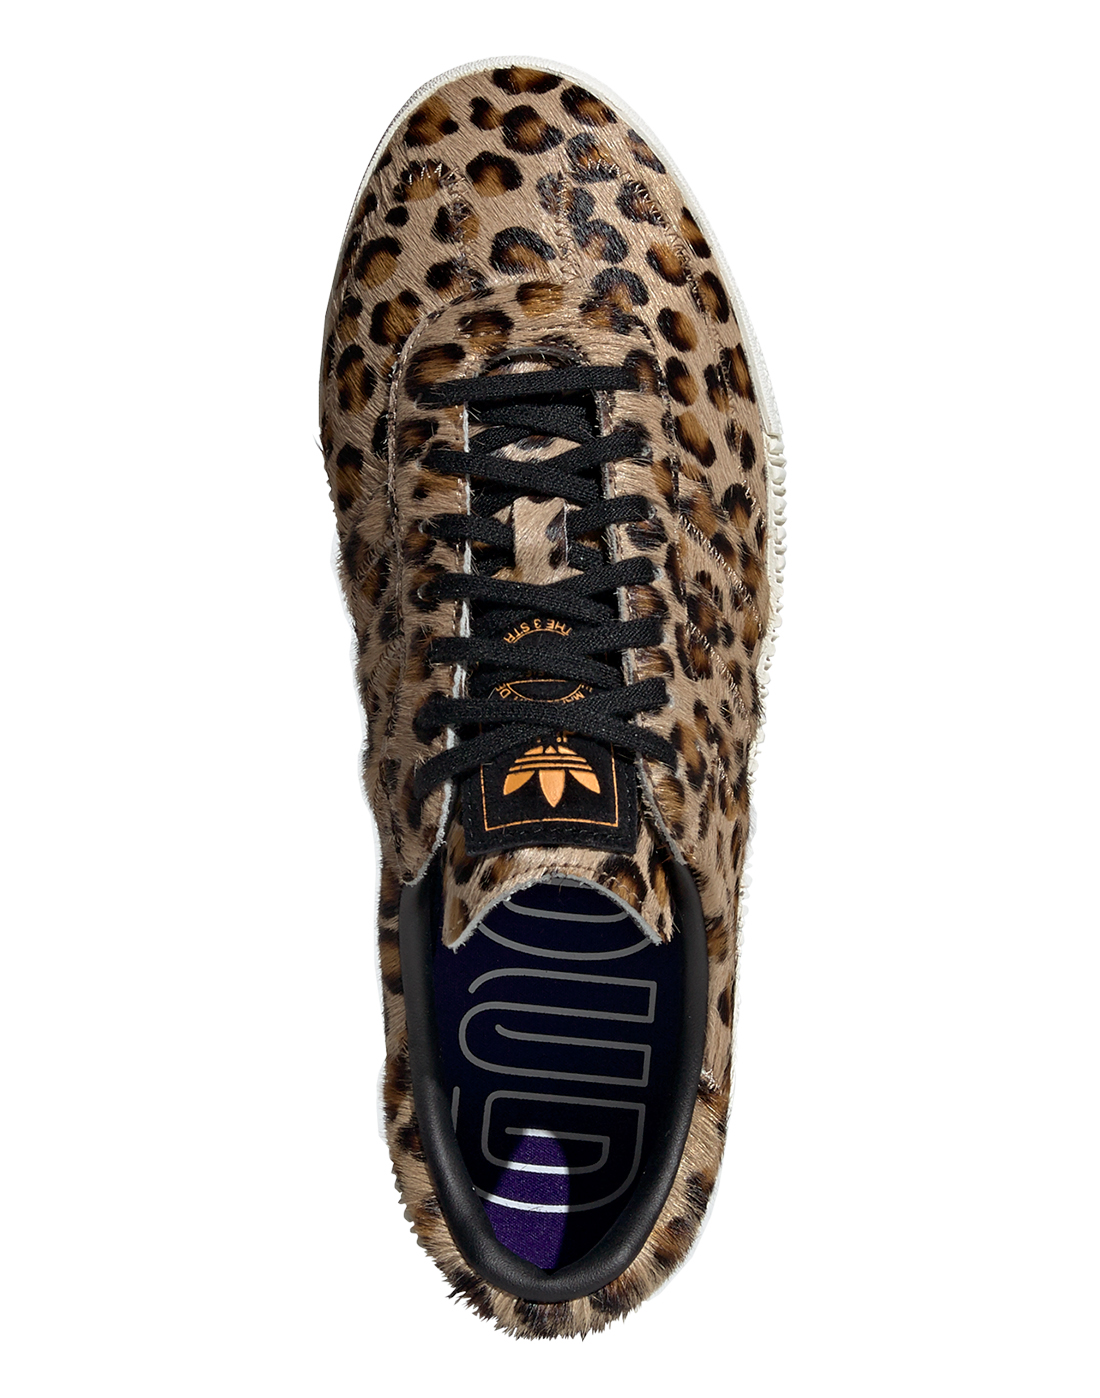 adidas originals outloud samba rose trainers in leopard print